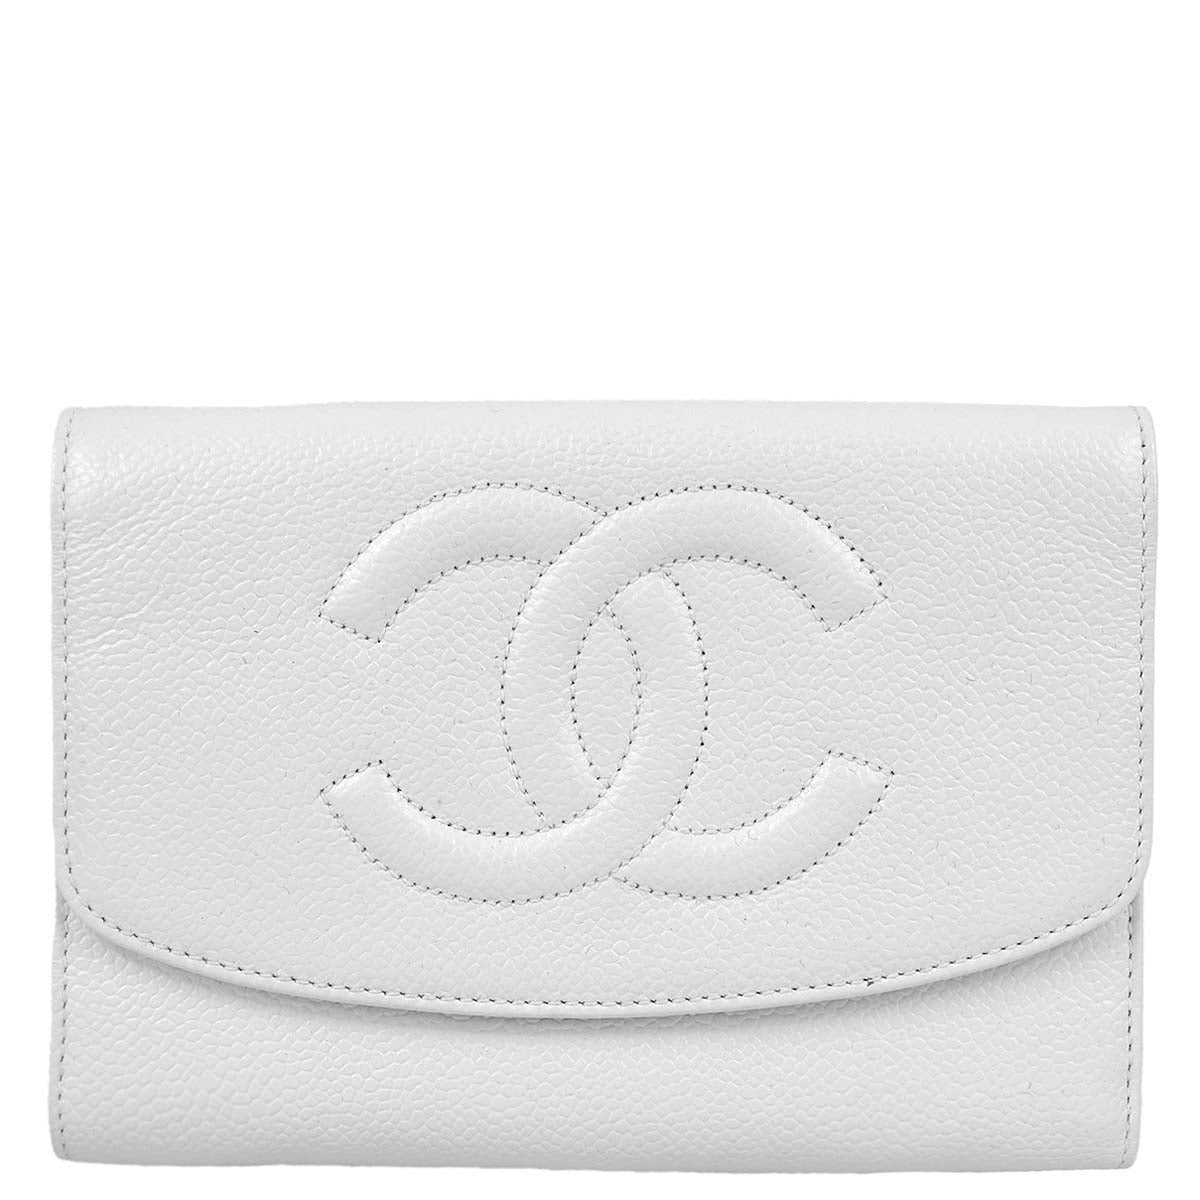 Chanel White Caviar Wallet Purse